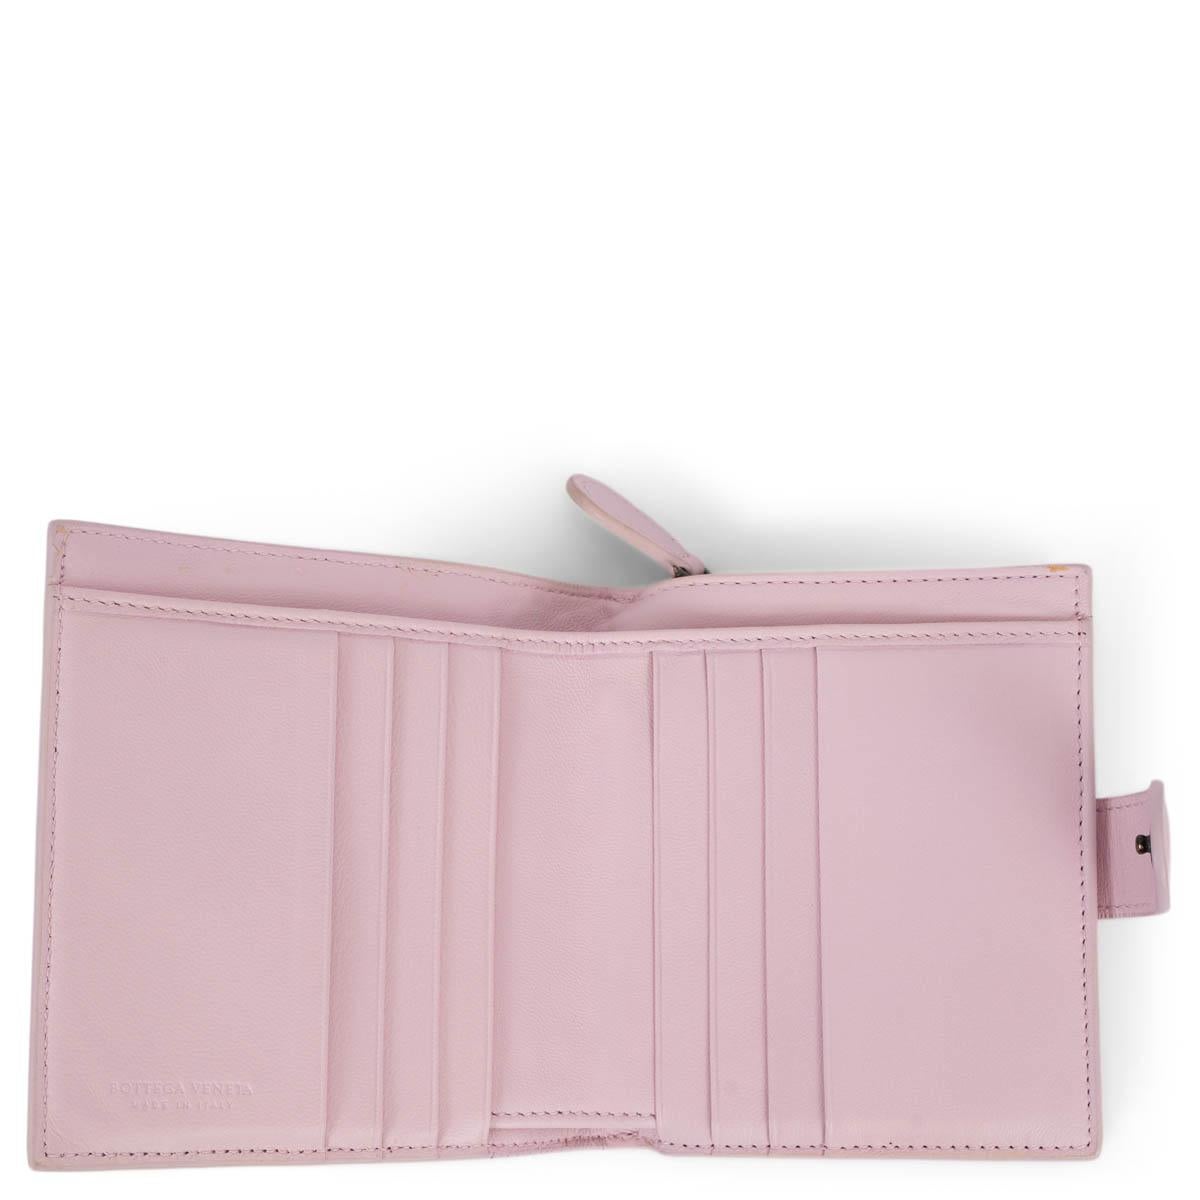 Women's BOTTEGA VENETA pink leather INTRECCIATO Compact Wallet For Sale